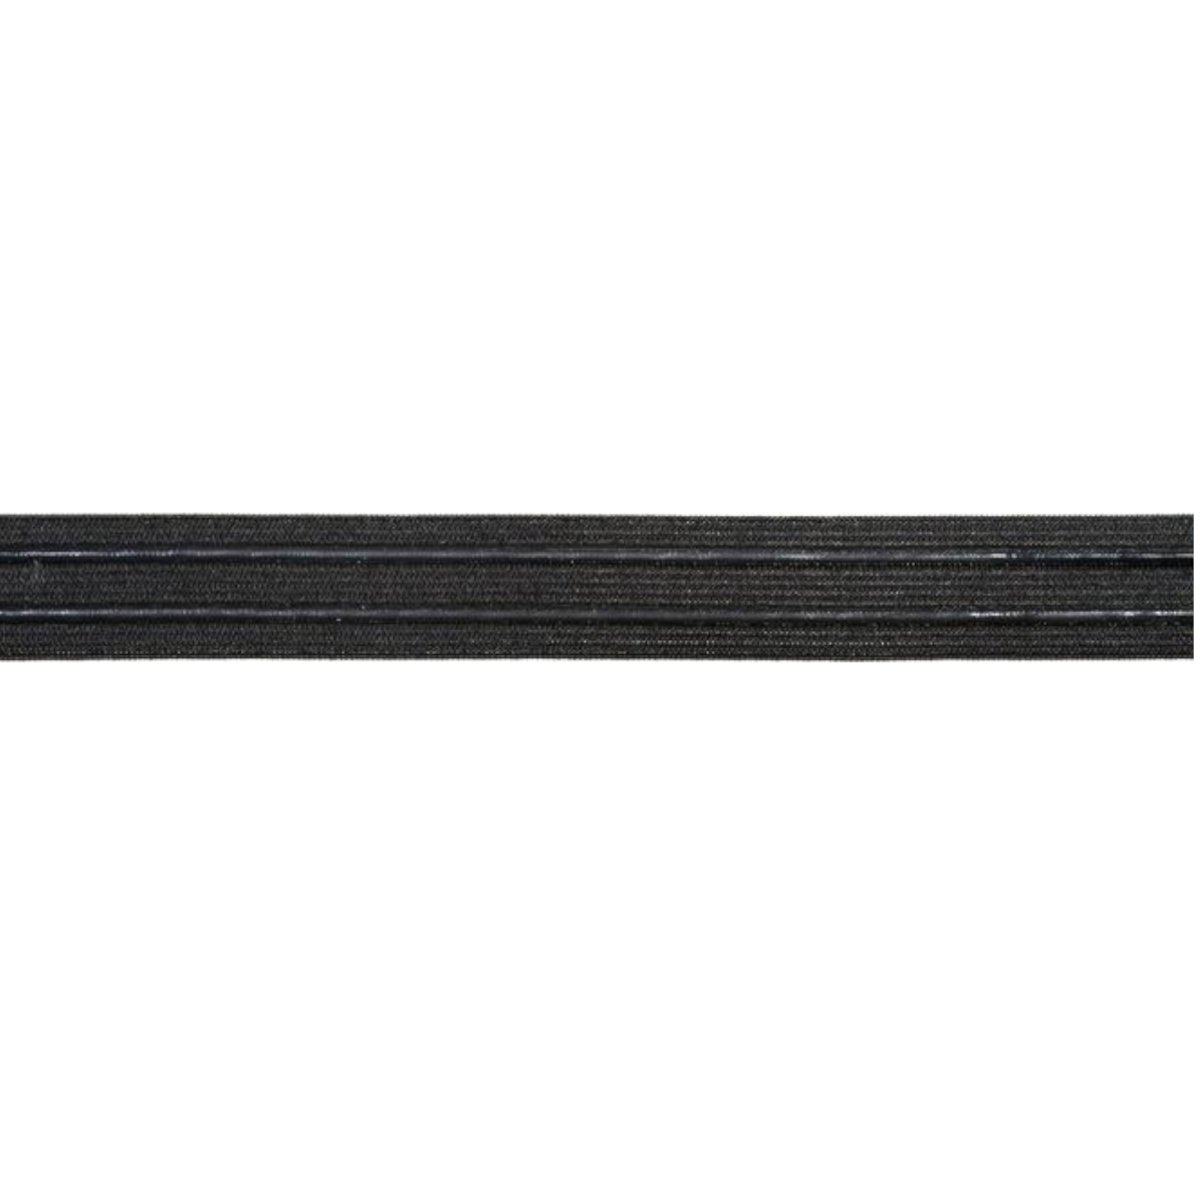 Anti-slip rubber band 25 mm, black